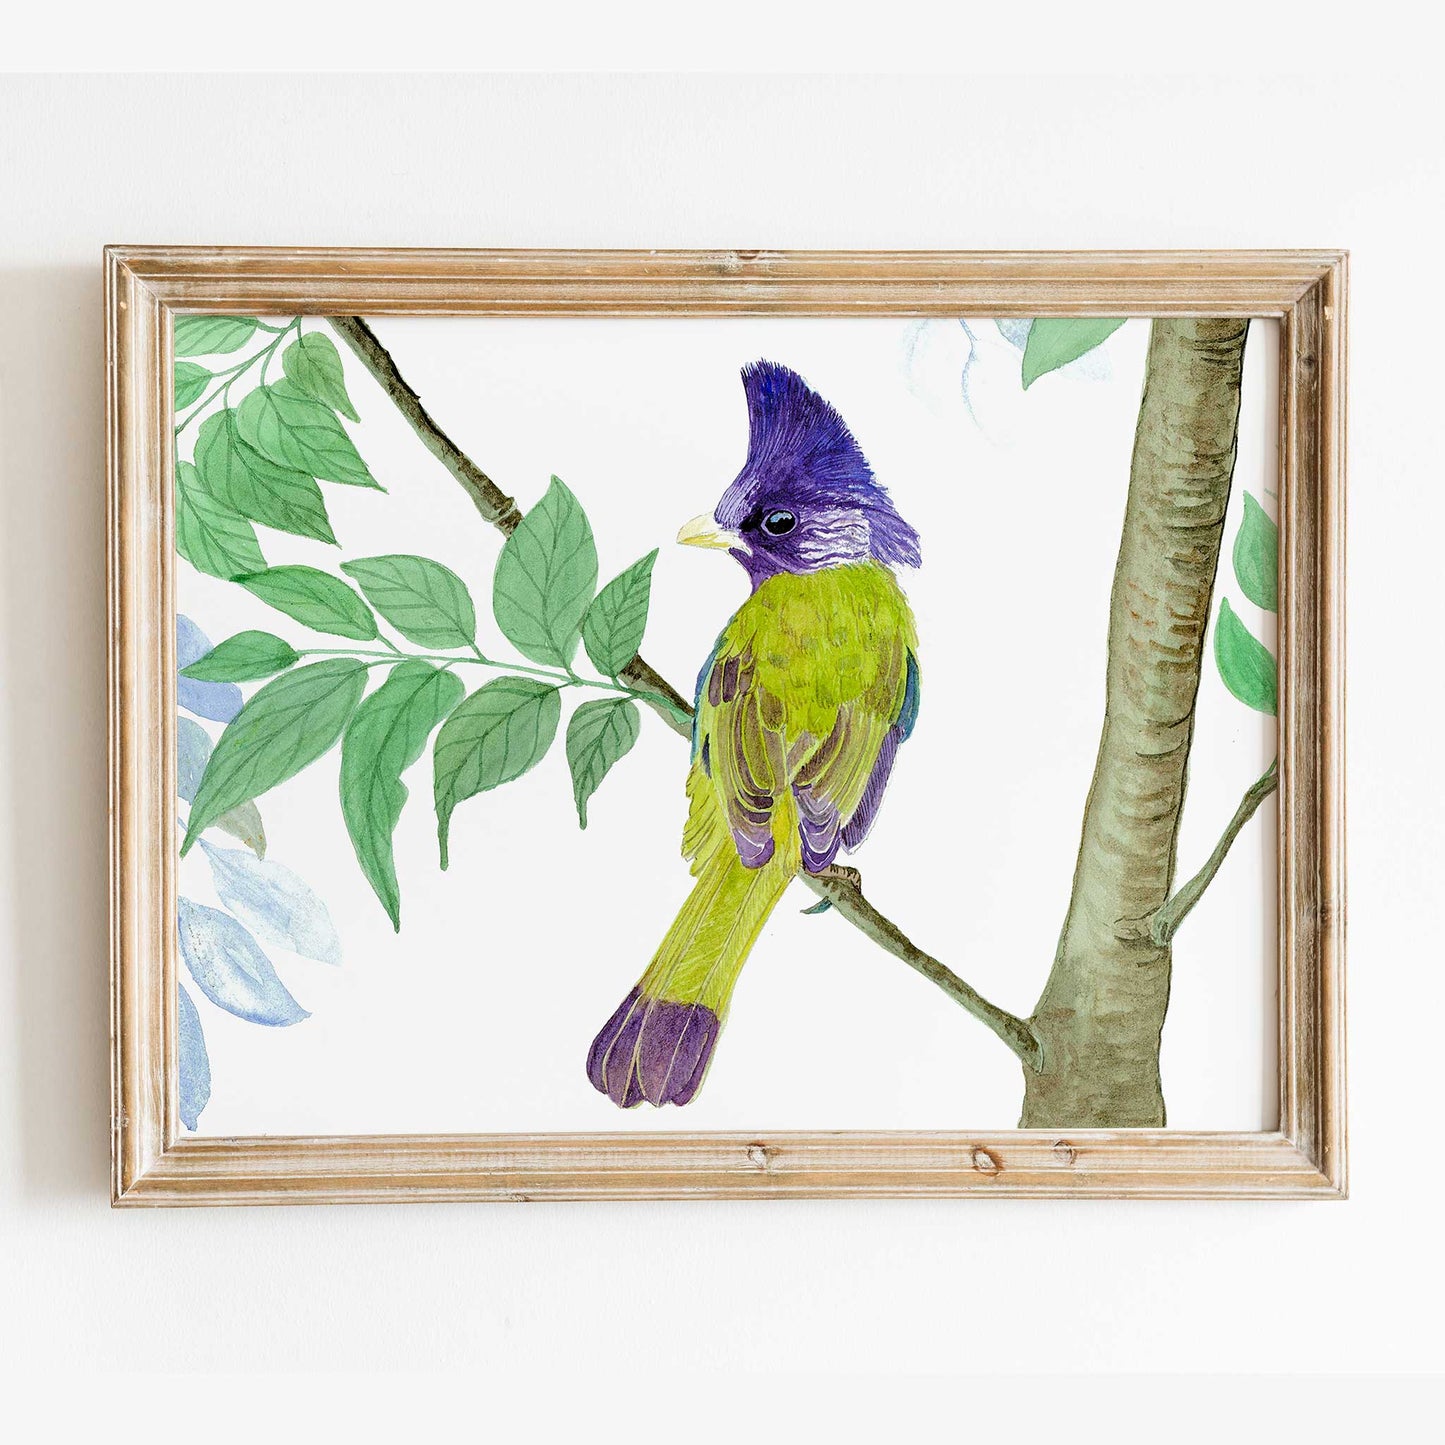 Studio Decorai Birds of India - Crested Finchbill - Art Prints